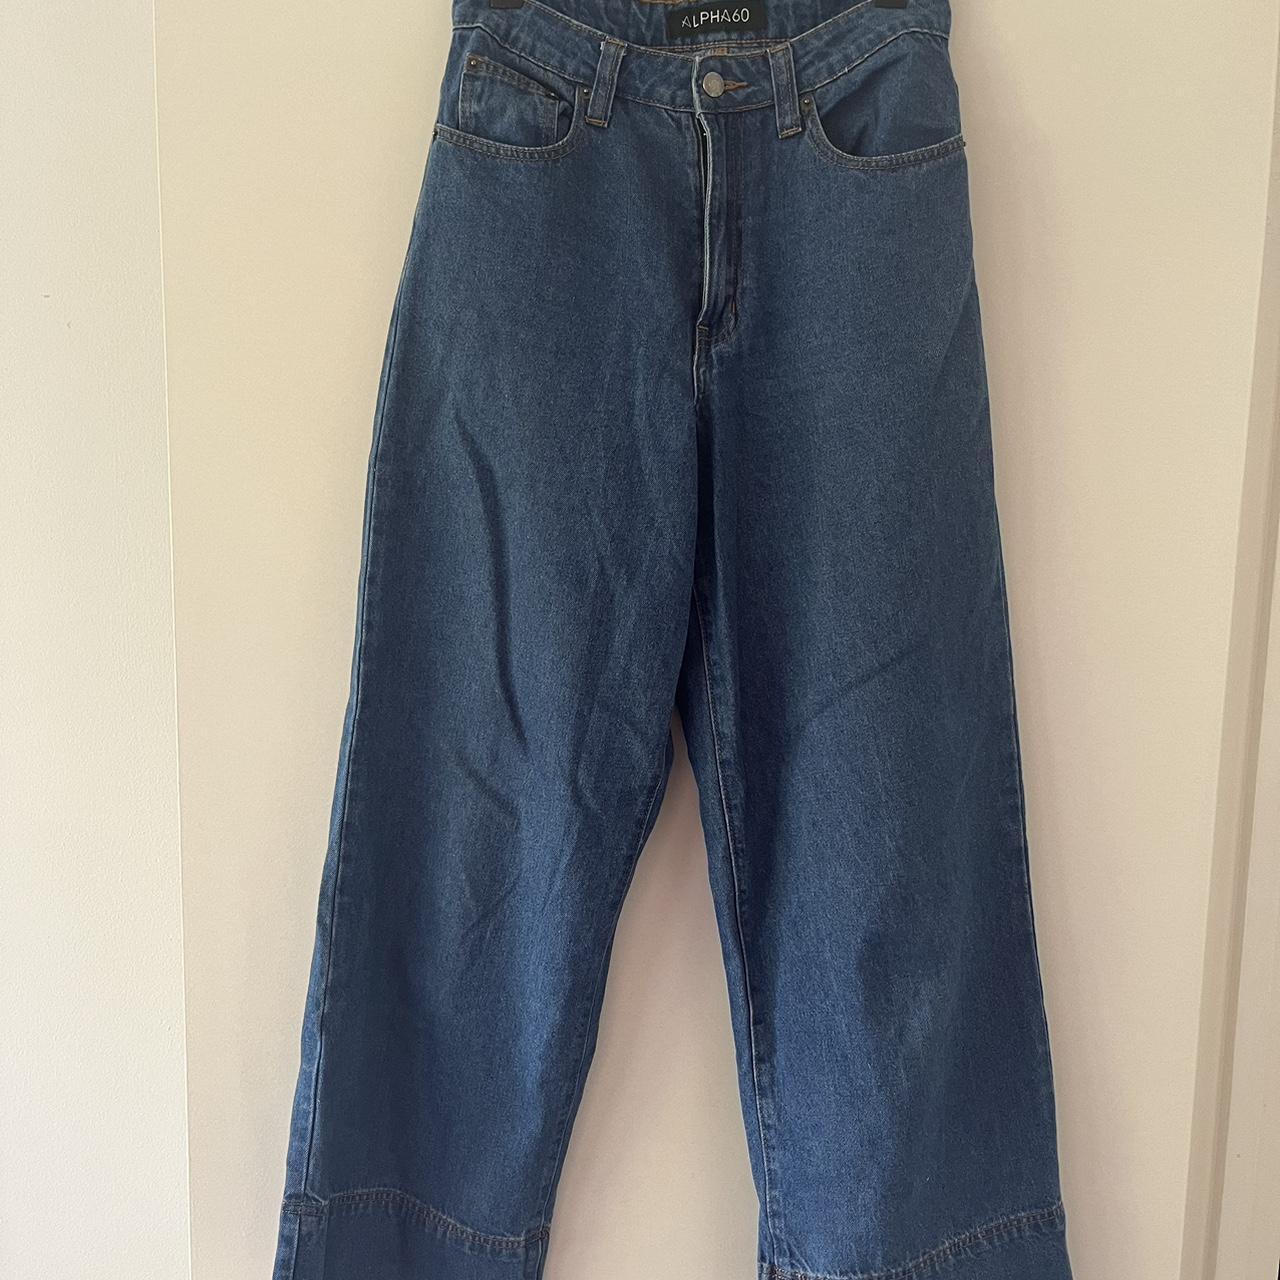 Alpha 60 XS wide leg jeans. - Depop